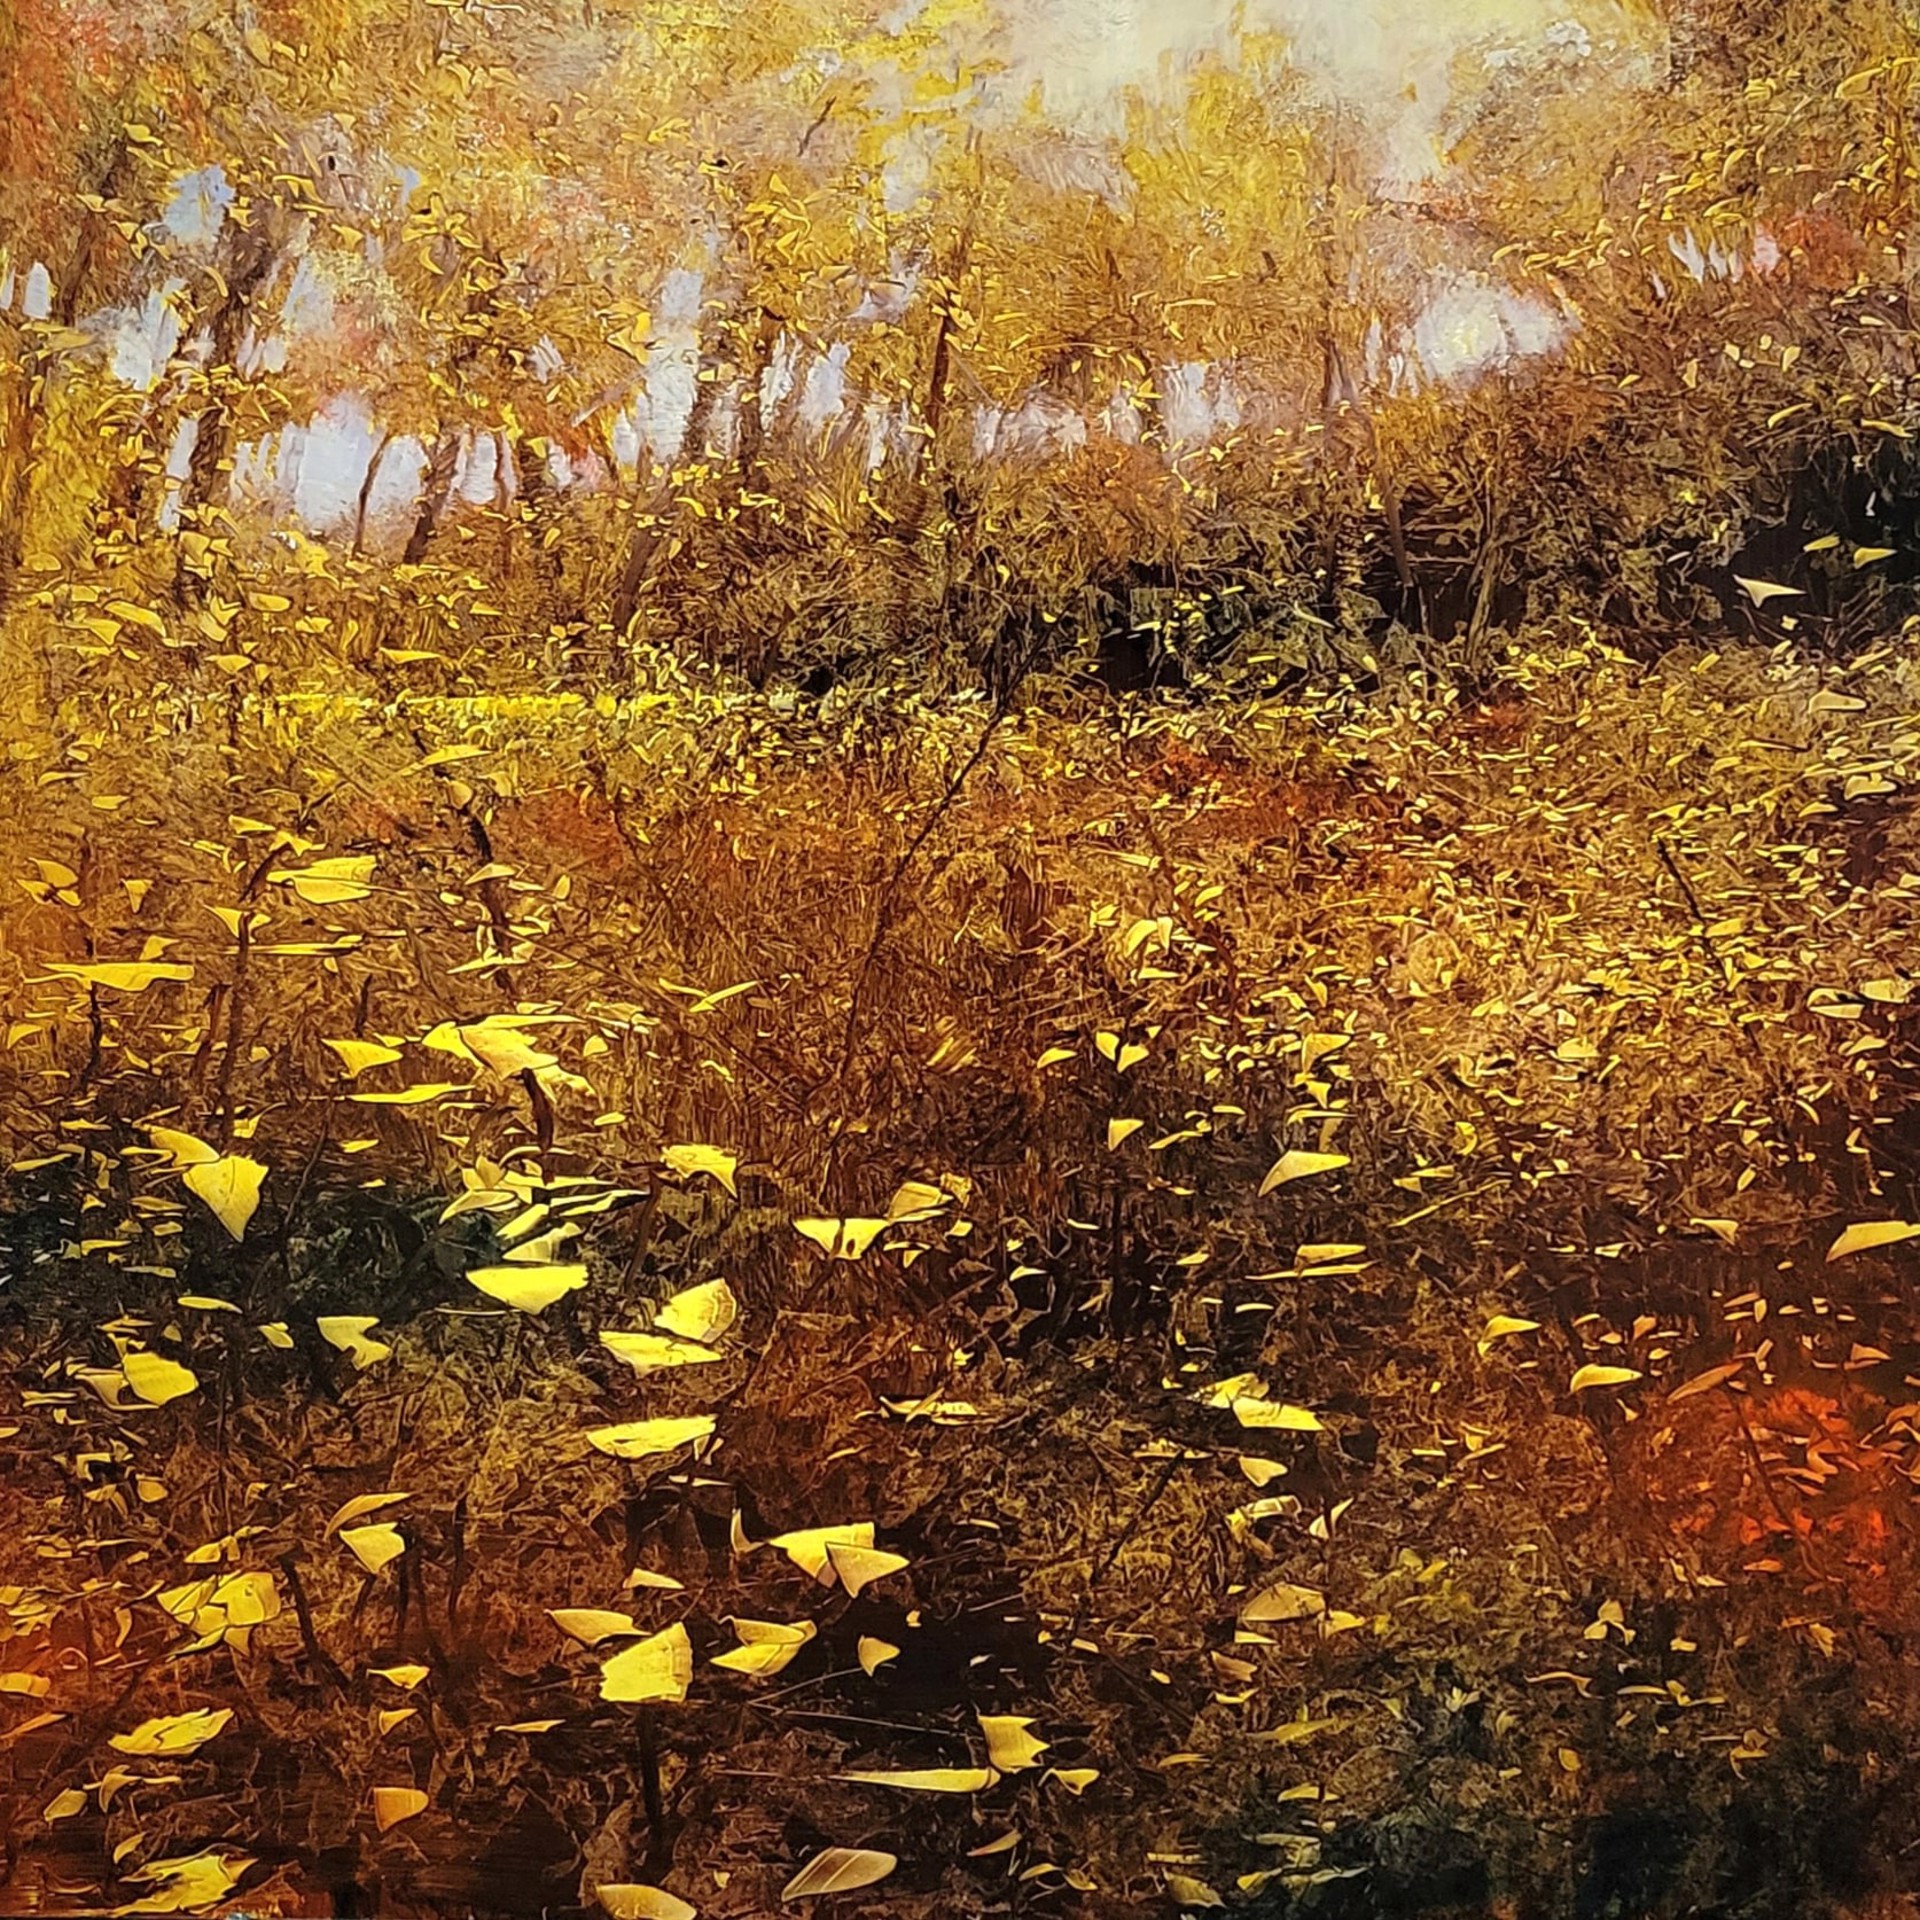 Autumn Leaf Dance by David Dunlop